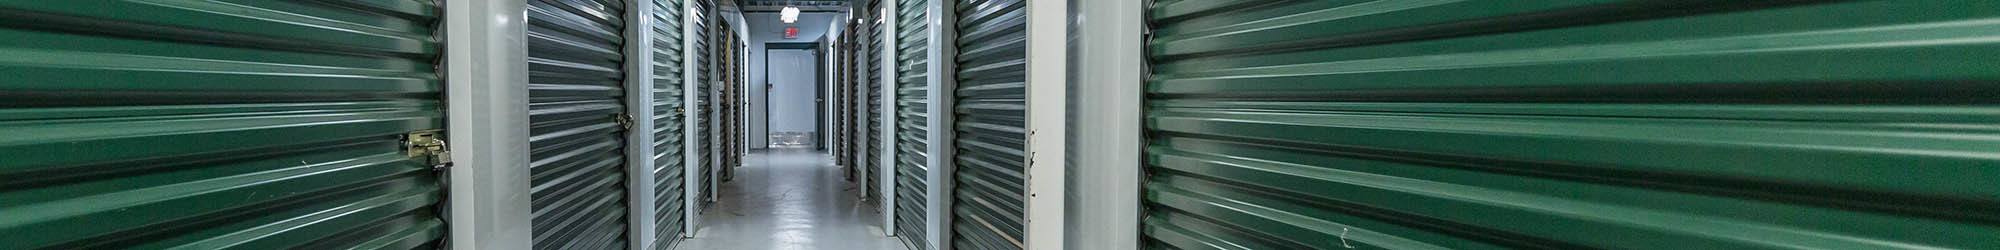 Climate controlled storage at Superior Self Storage in El Dorado Hills, California